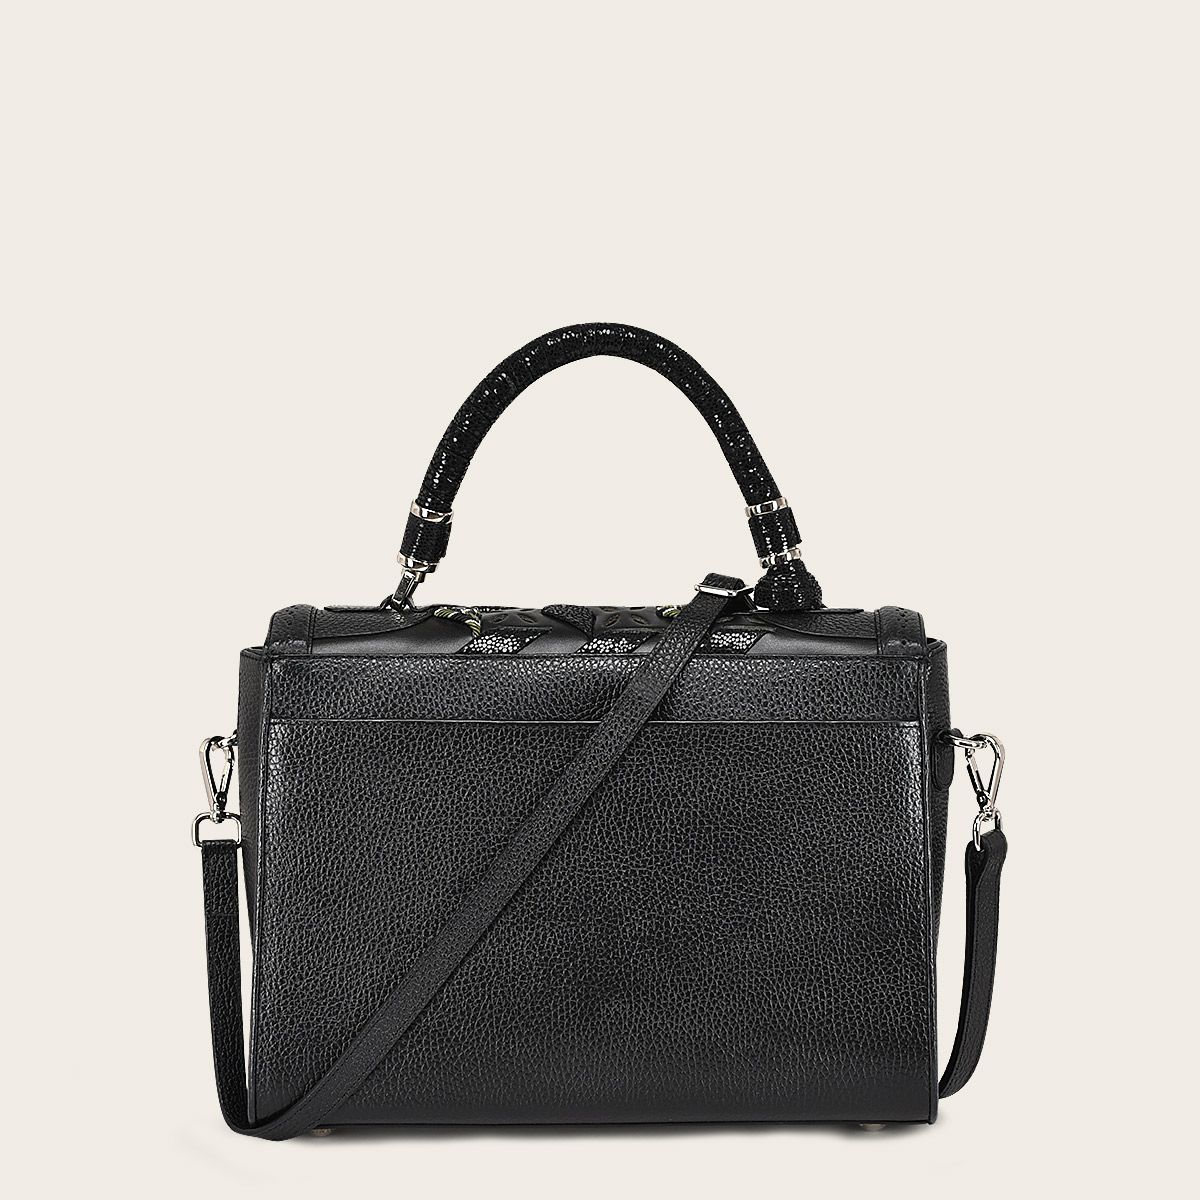 Printed black leather satchel bag